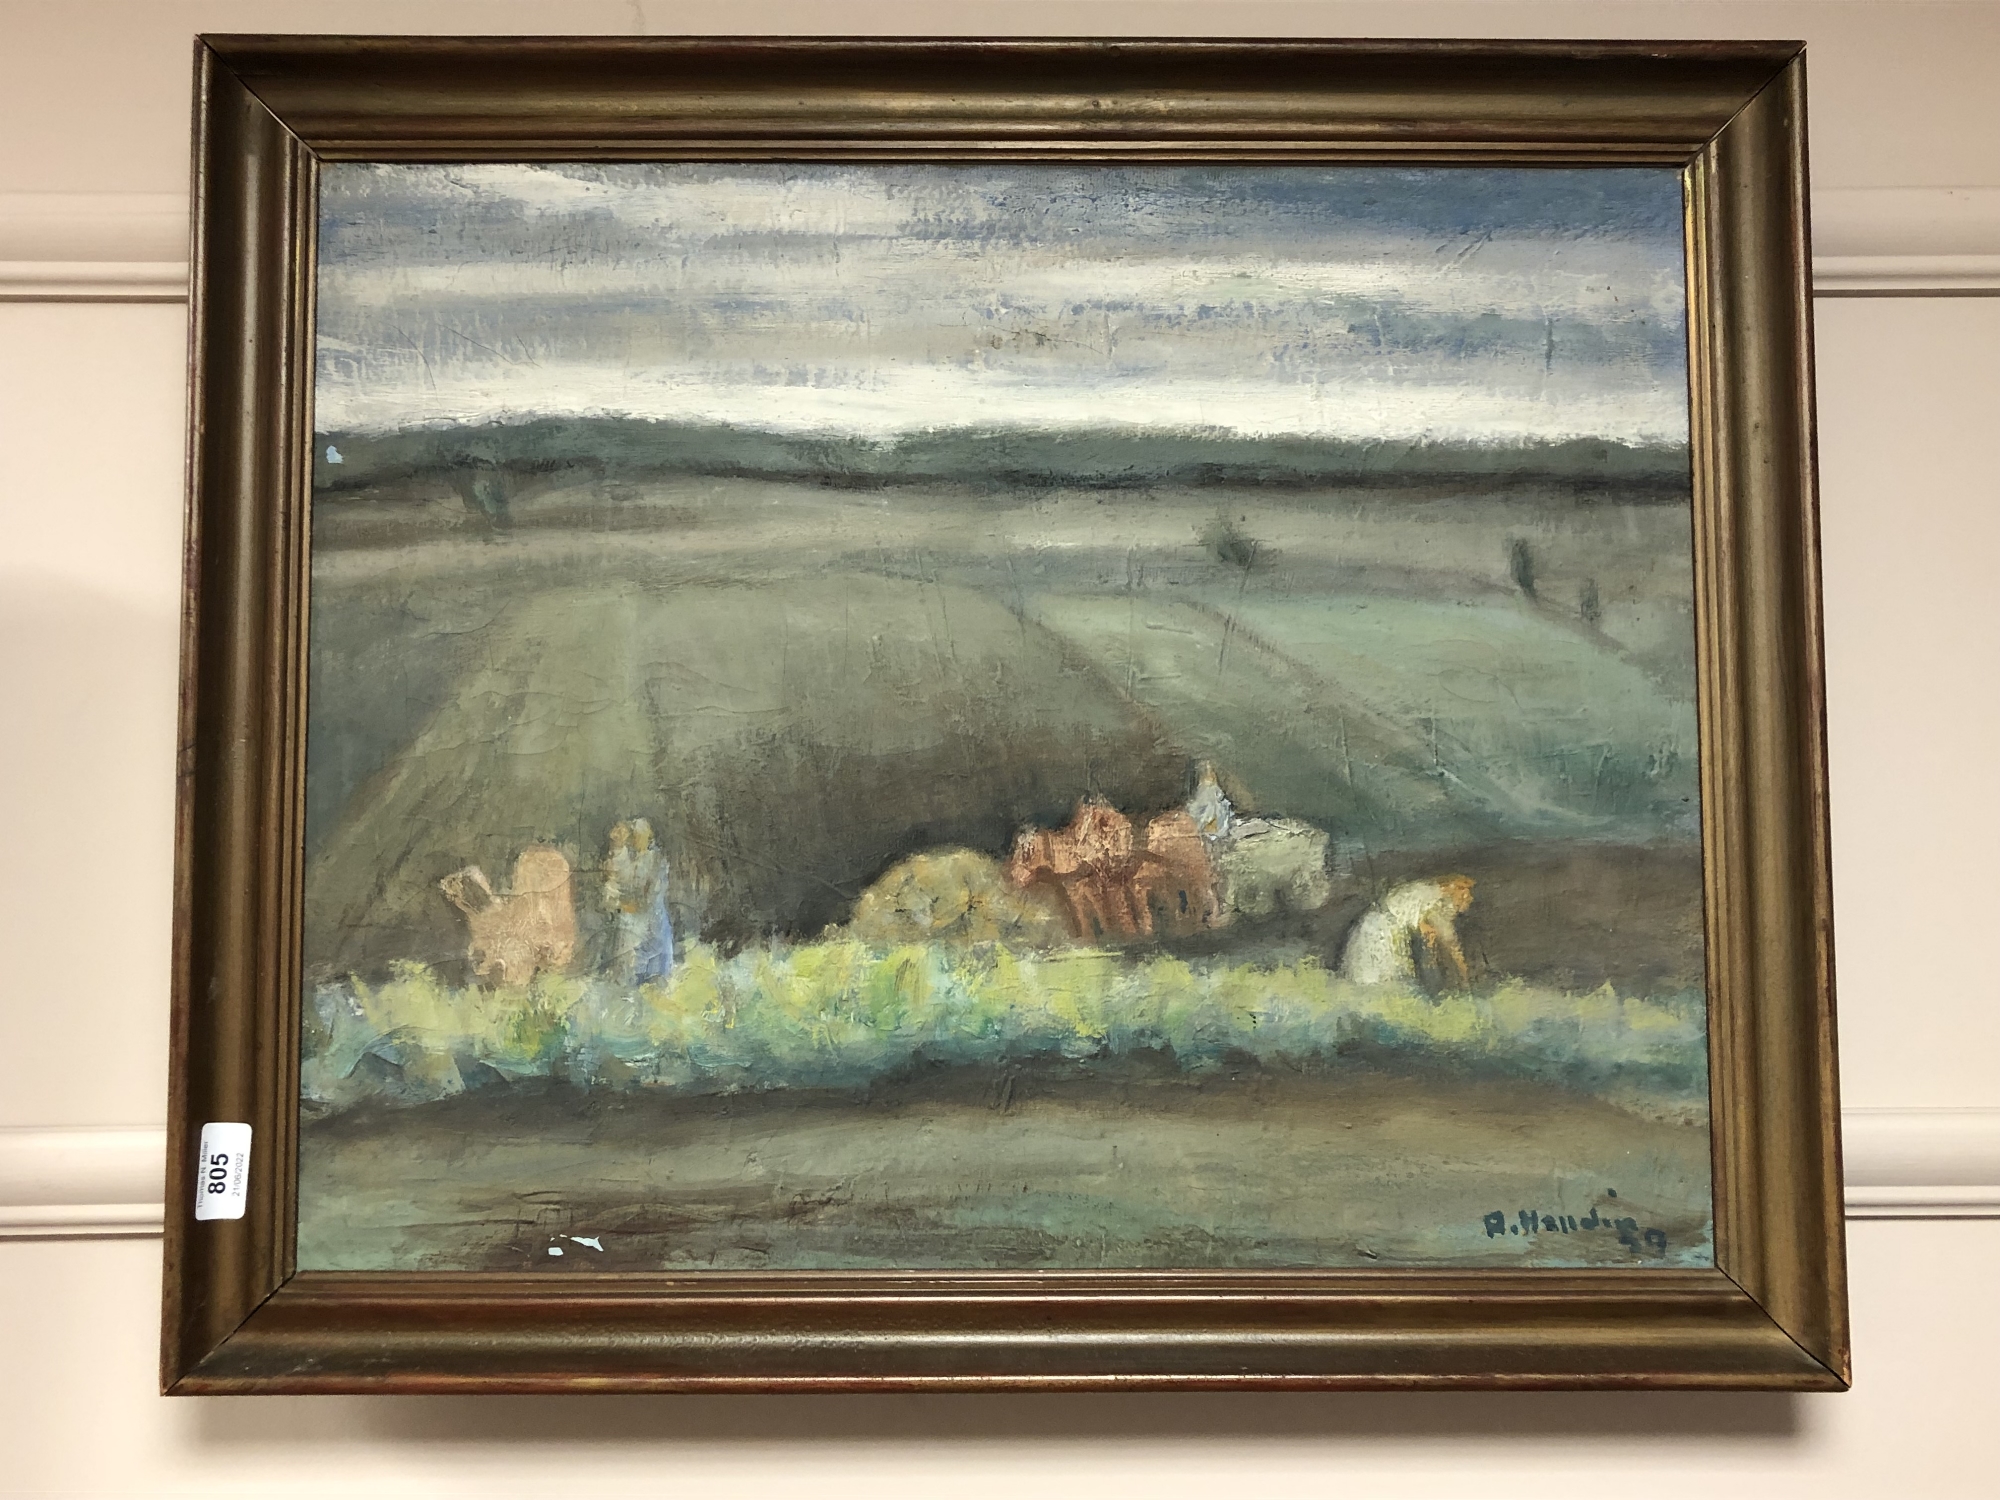 Continental school : Figures in farm land, oil on canvas, 58 cm x 46 cm.